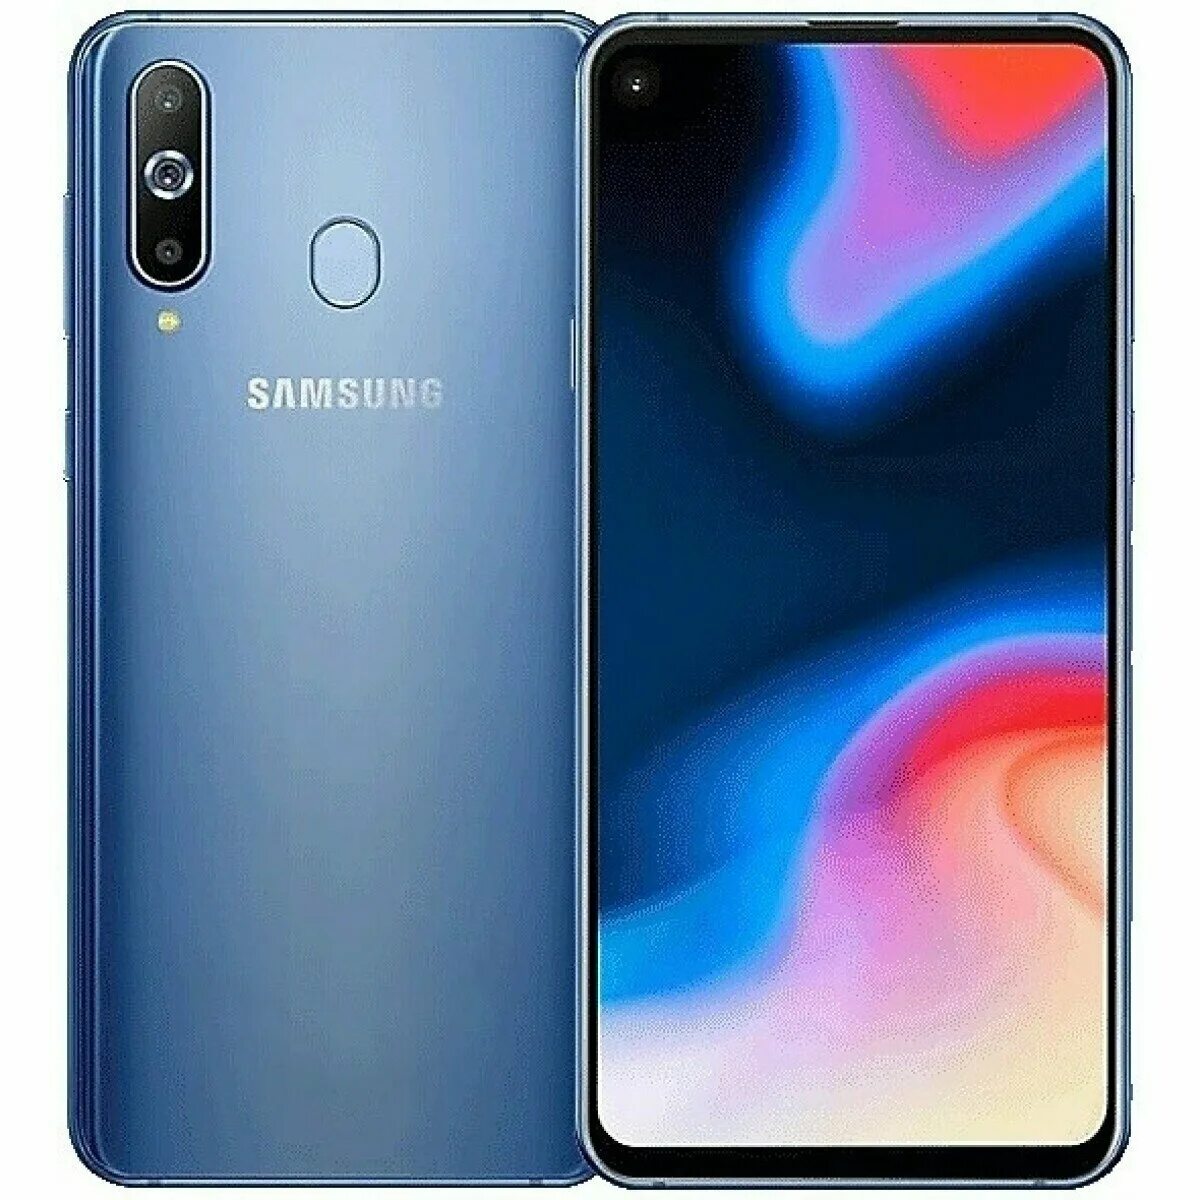 Samsung Galaxy s8. Samsung a8s 128gb/6gb. Samsung Galaxy a9pro 6. Самсунг галакси а8 2019.